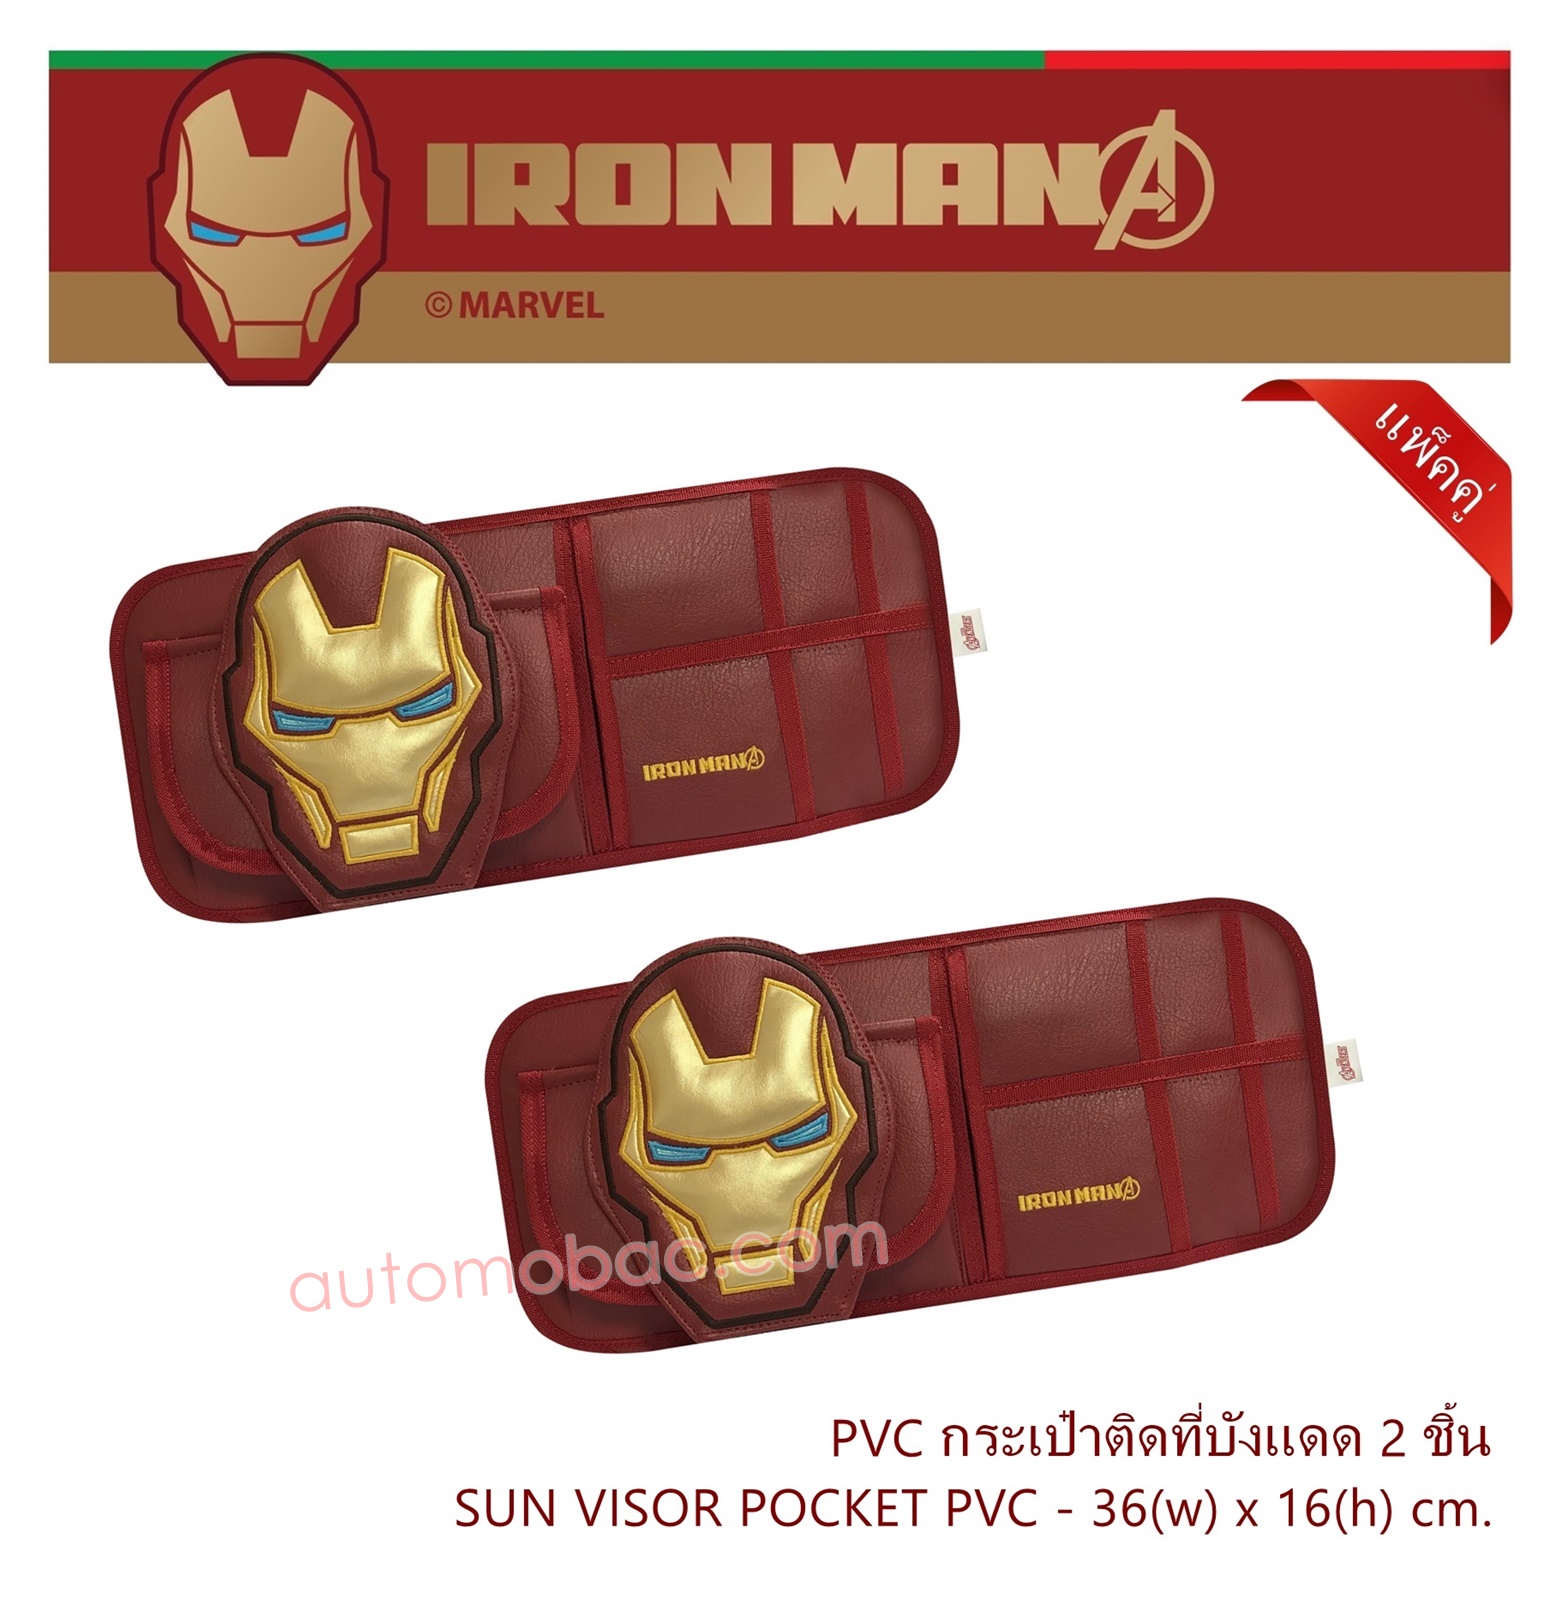 IRON-MAN กระเป๋าติดที่บังแดด 2 ชิ้น หนัง PVC มีที่ใส่แว่นตา และนามบัตร จัดระเบียบ หยิบใช้สะดวก  ทำ